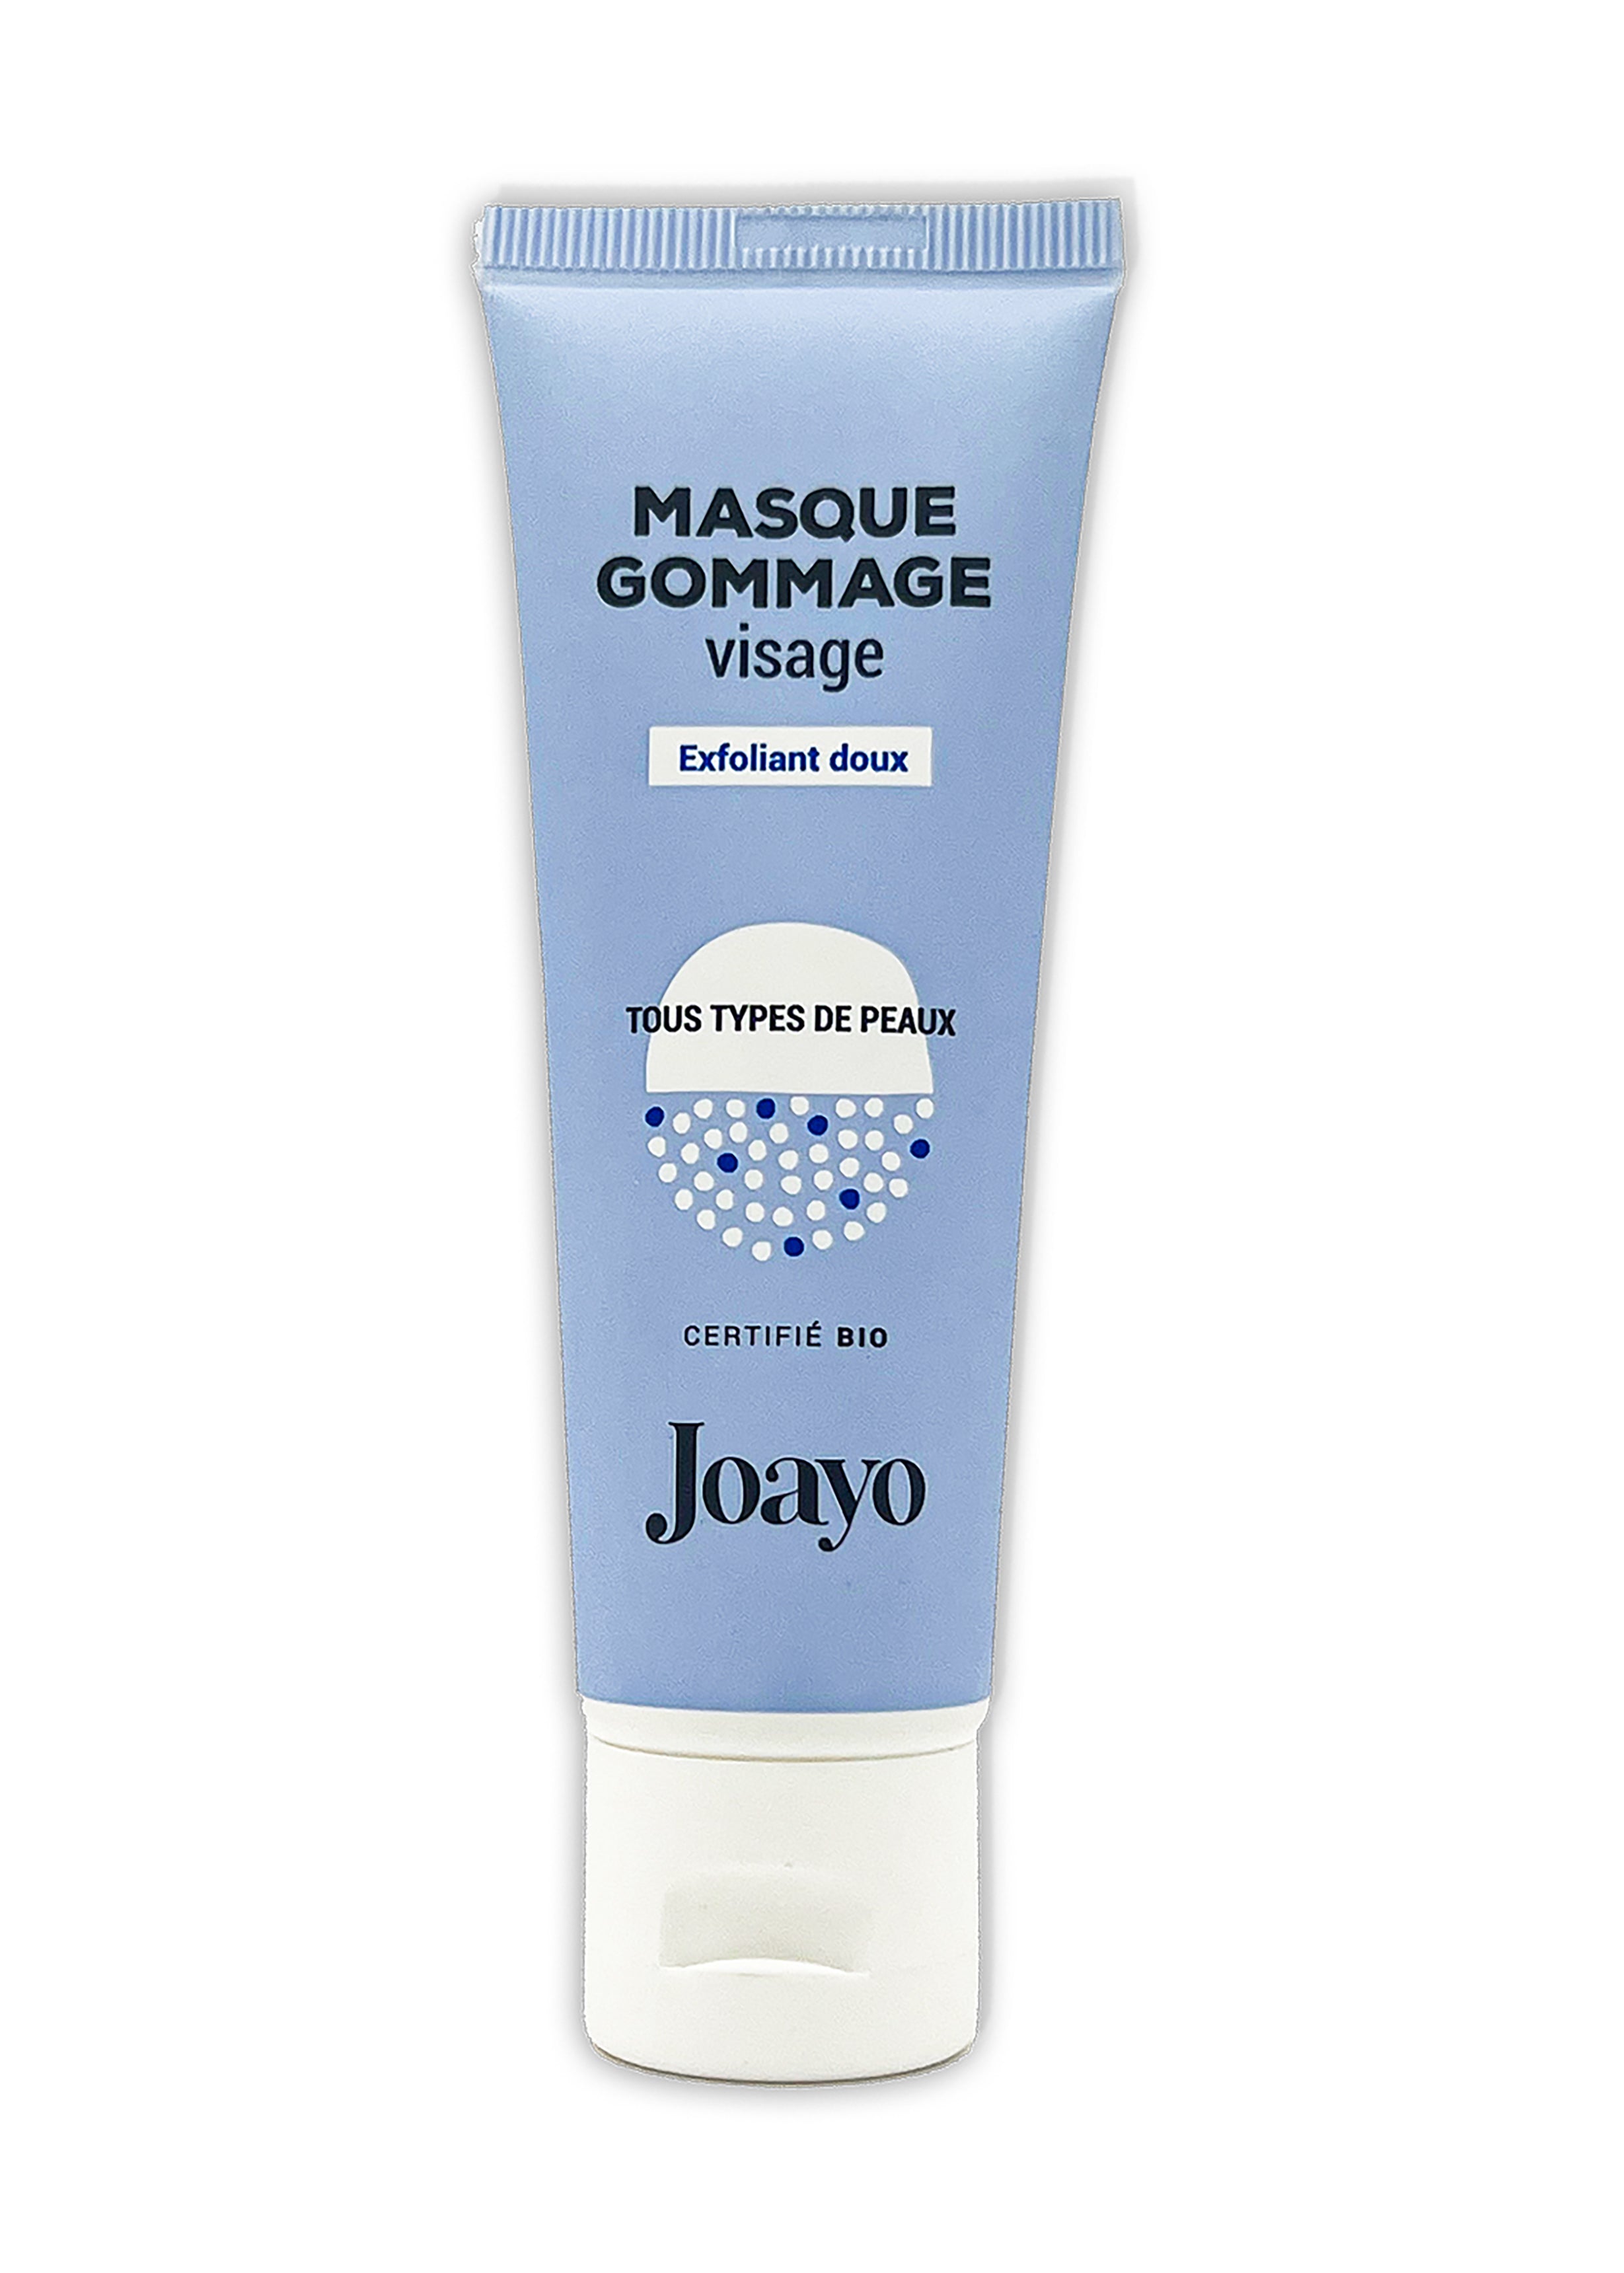 Masque Gommage exfoliant - 50ml